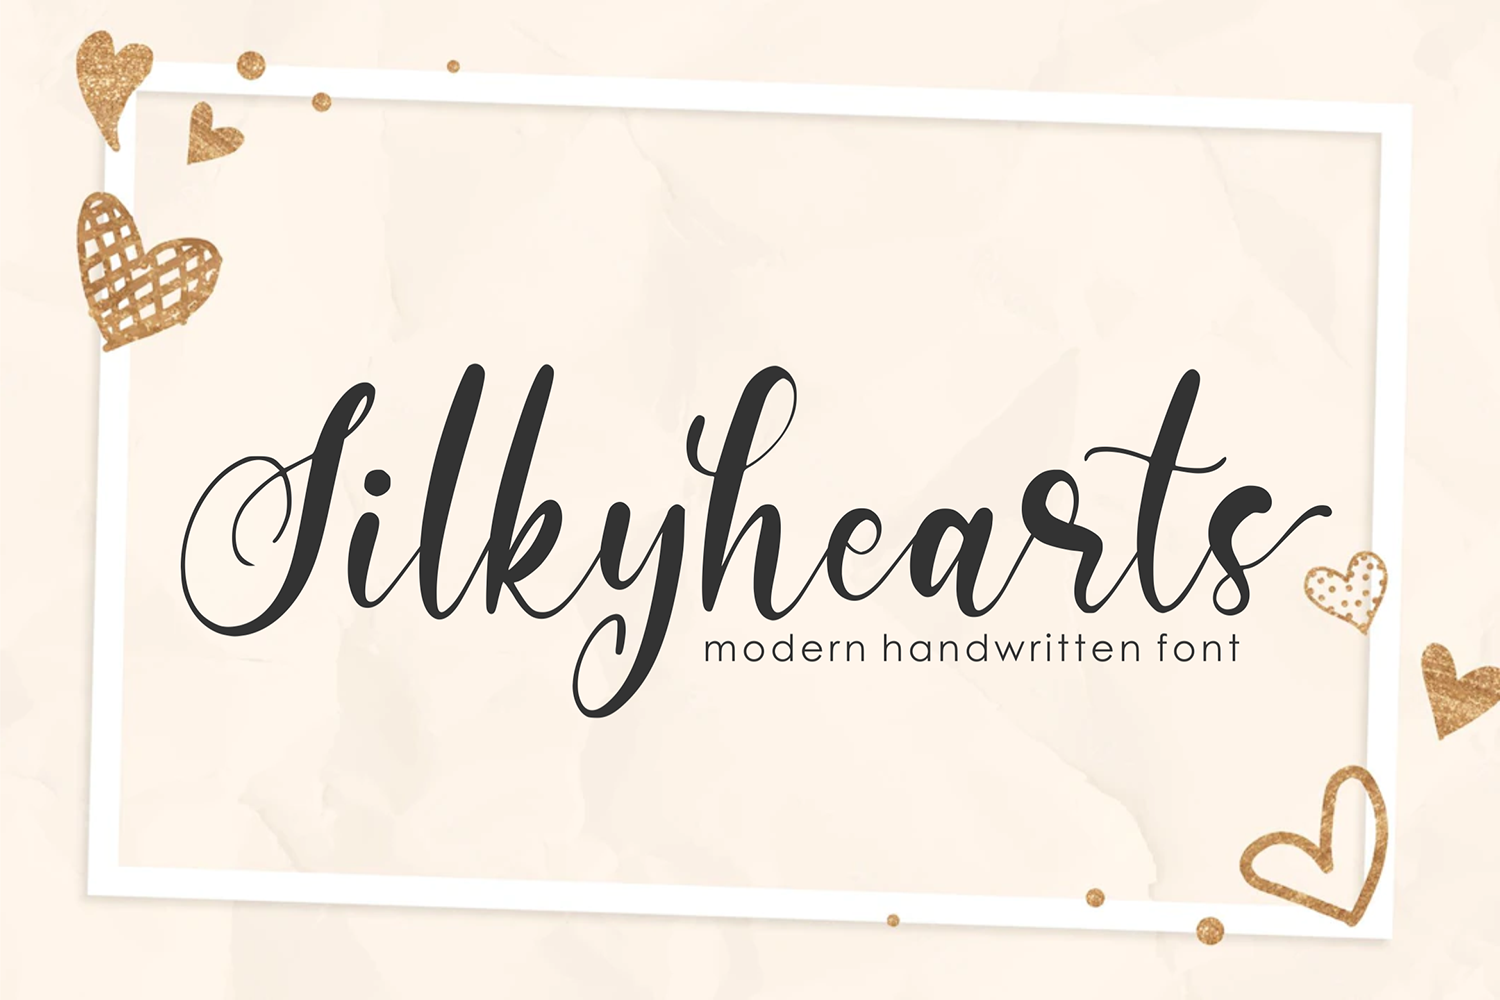 Silkyhearts Free Font